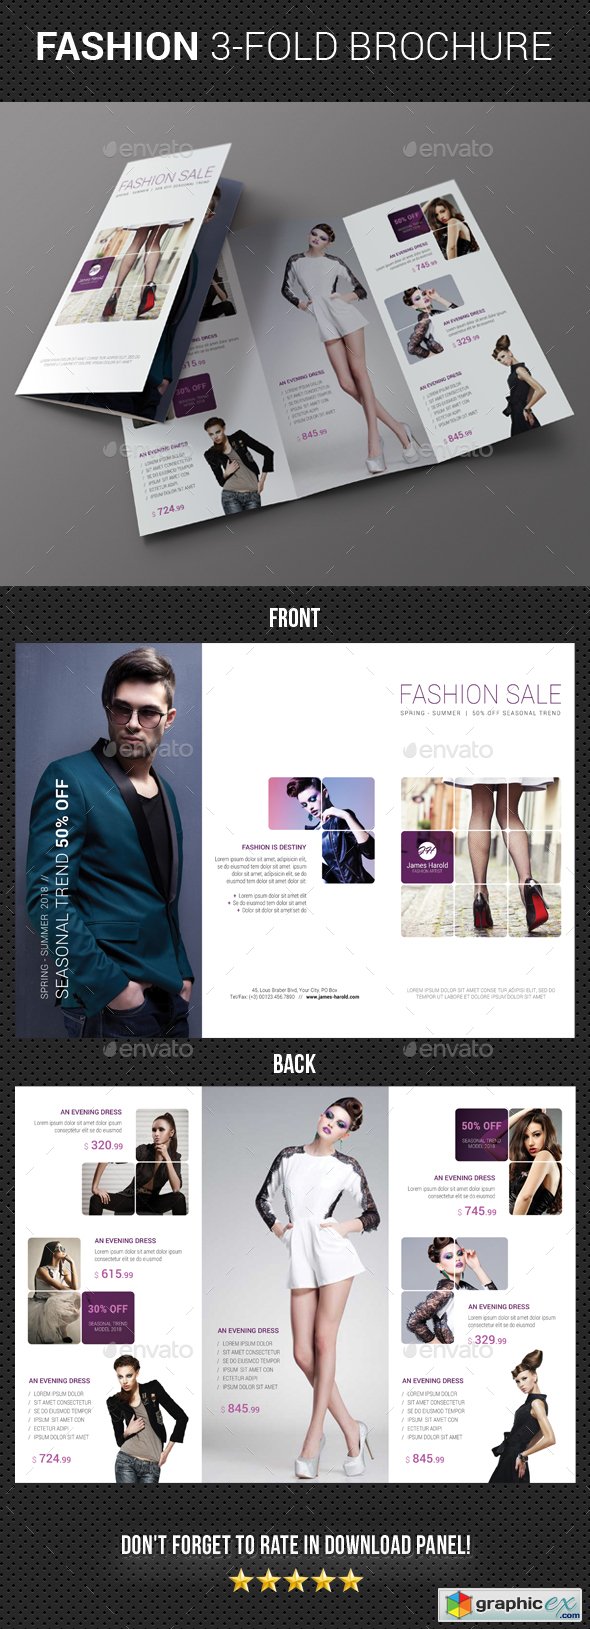 Fashion 3-Fold Brochure 21